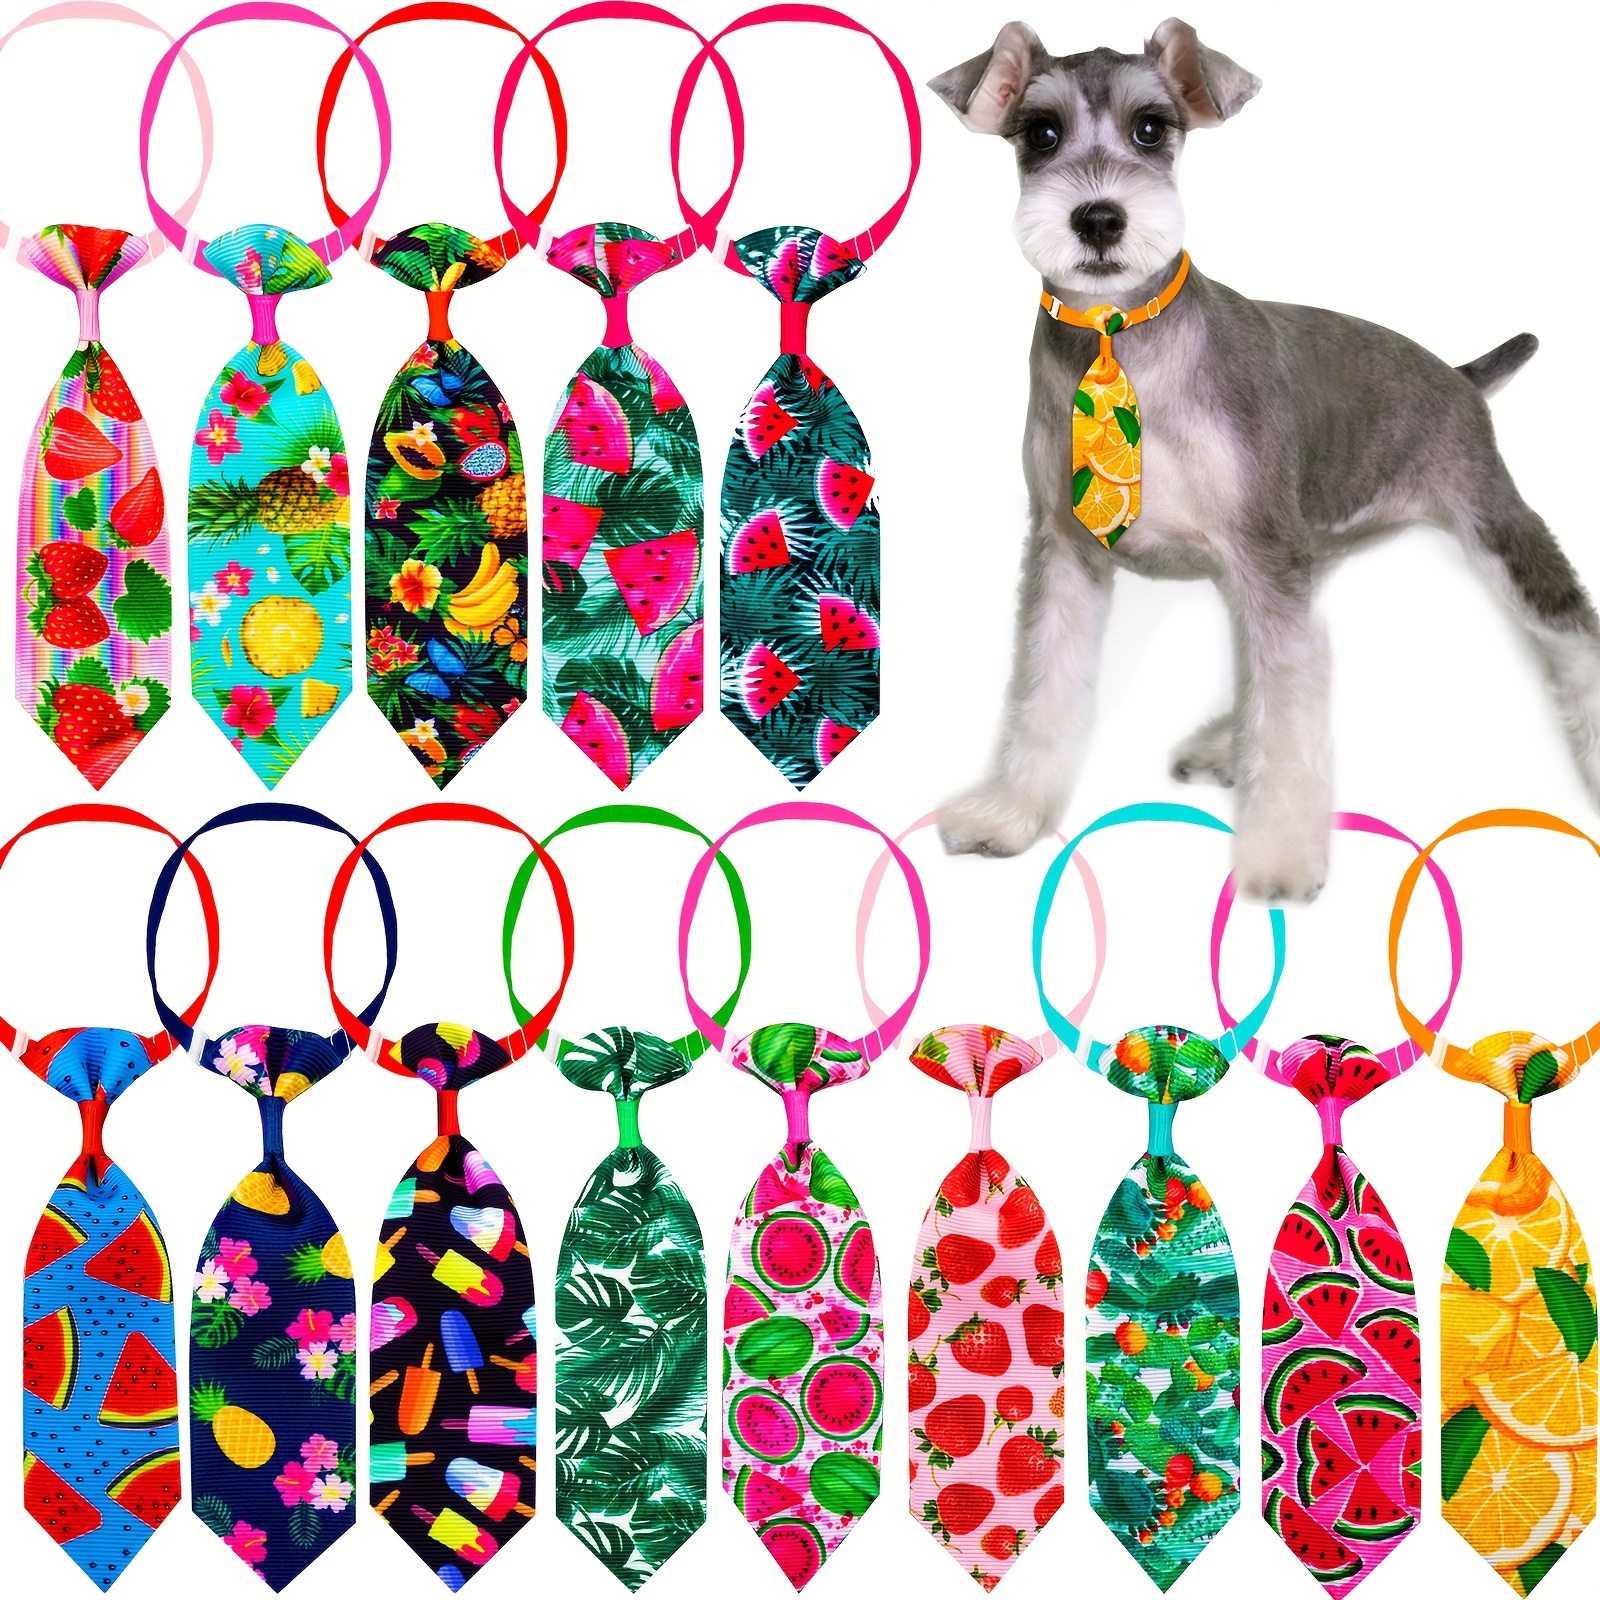 

10pcs Assorted Color Tie Style Pet Cool Summer Dog Cat Necktie Collars, For Pet Outdoor Decoration Supplies